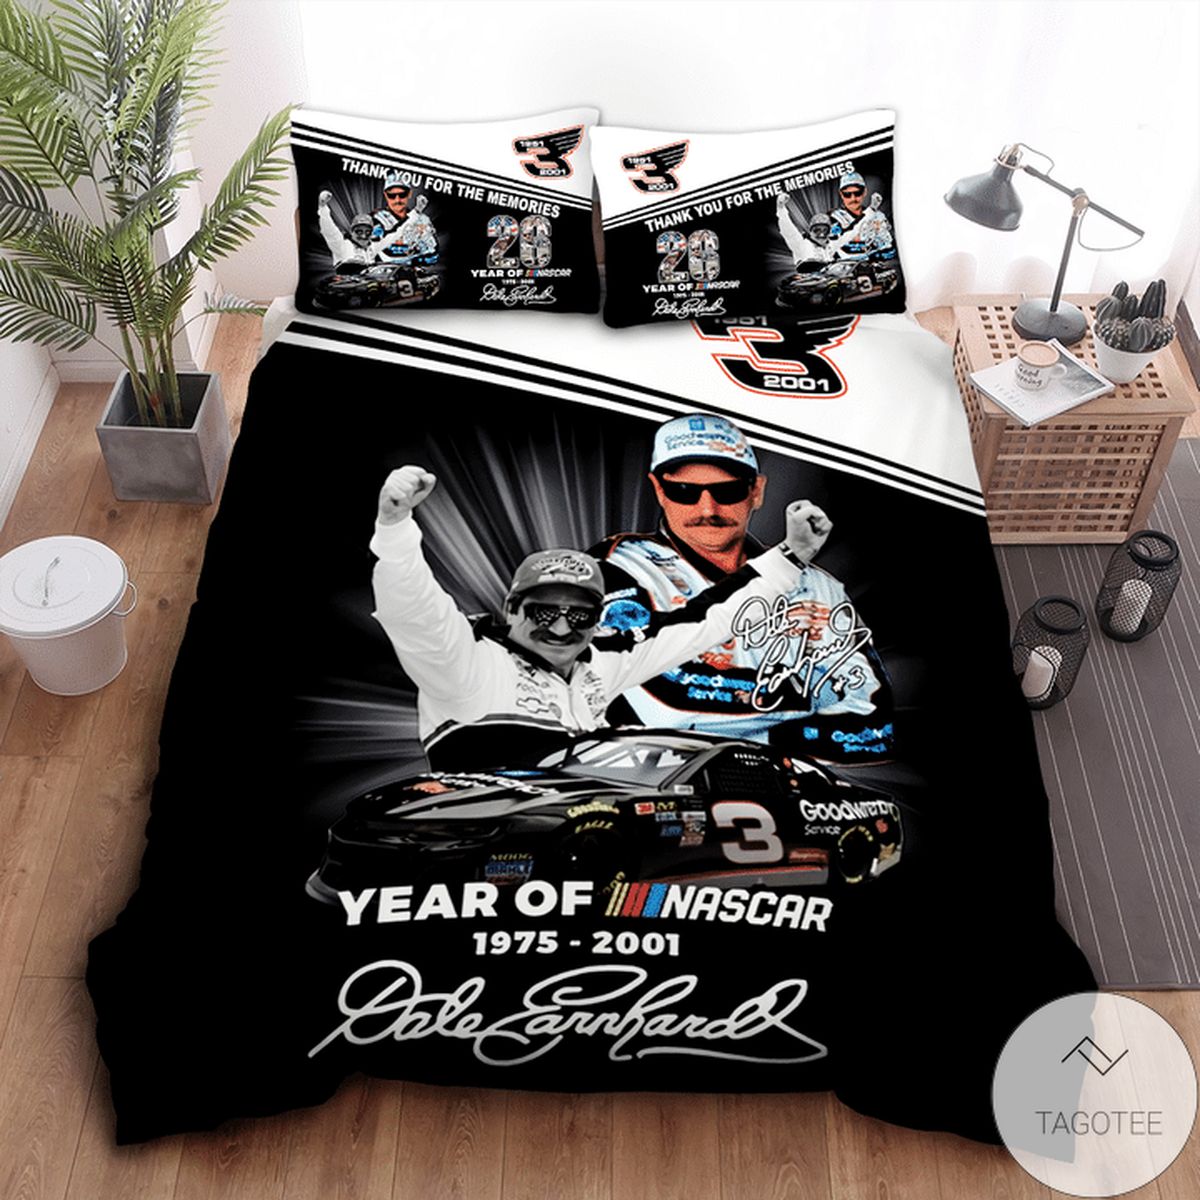 Dale Earnhardt 26 Year Of Nascar Bedding Set